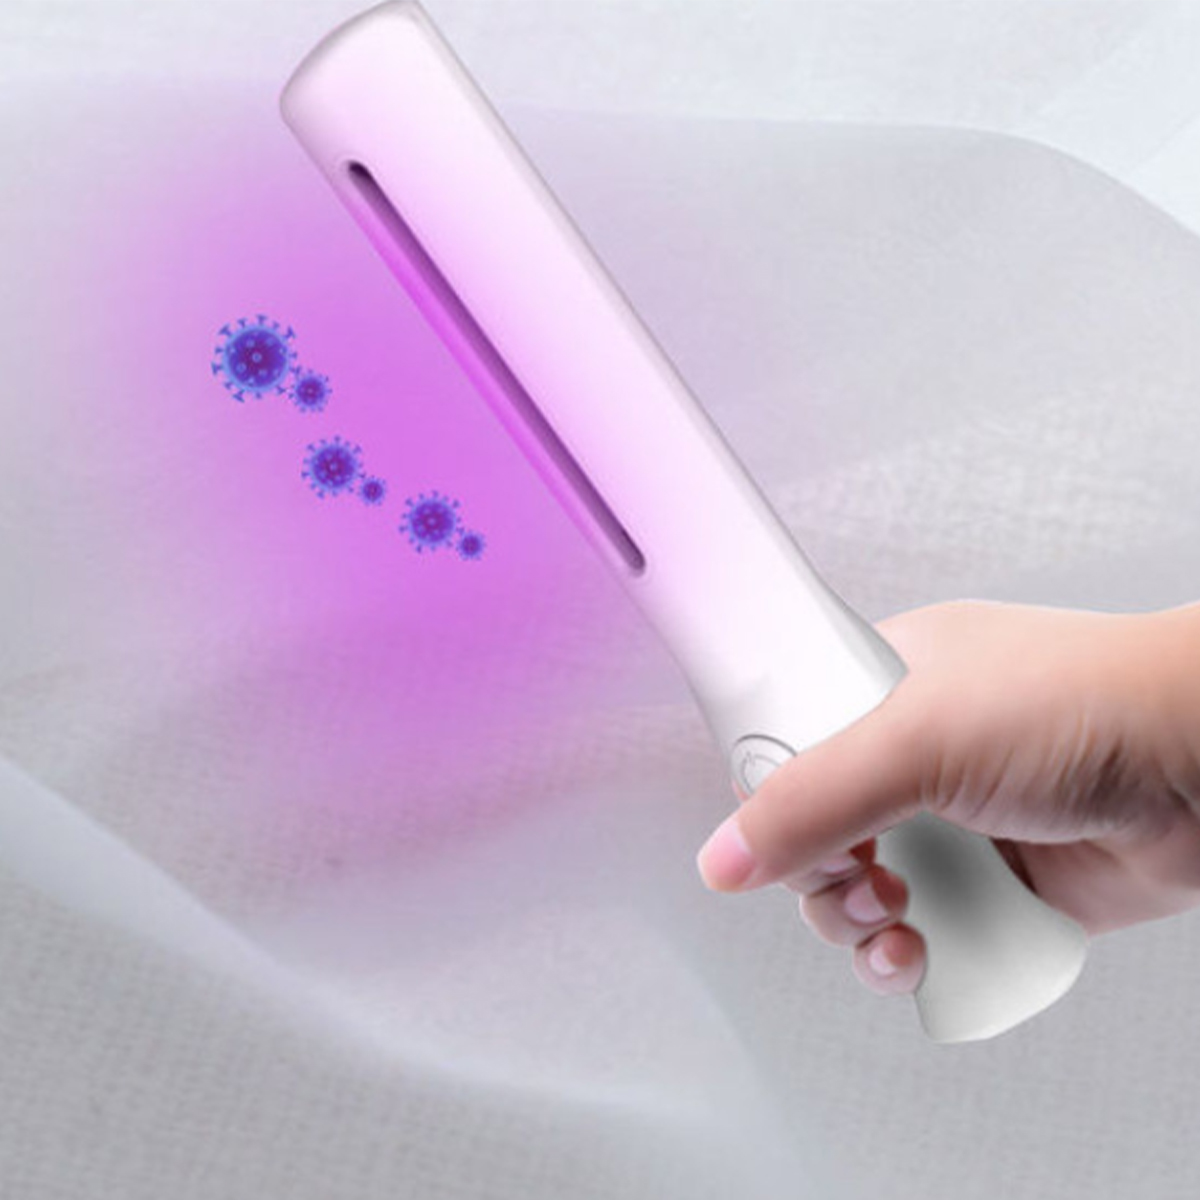 Ultraviolet-Disinfection-Lamp-Sterilization-Lamp-Portable-UV-Handheld-Disinfection-Germicidal-Flashl-1691971-6